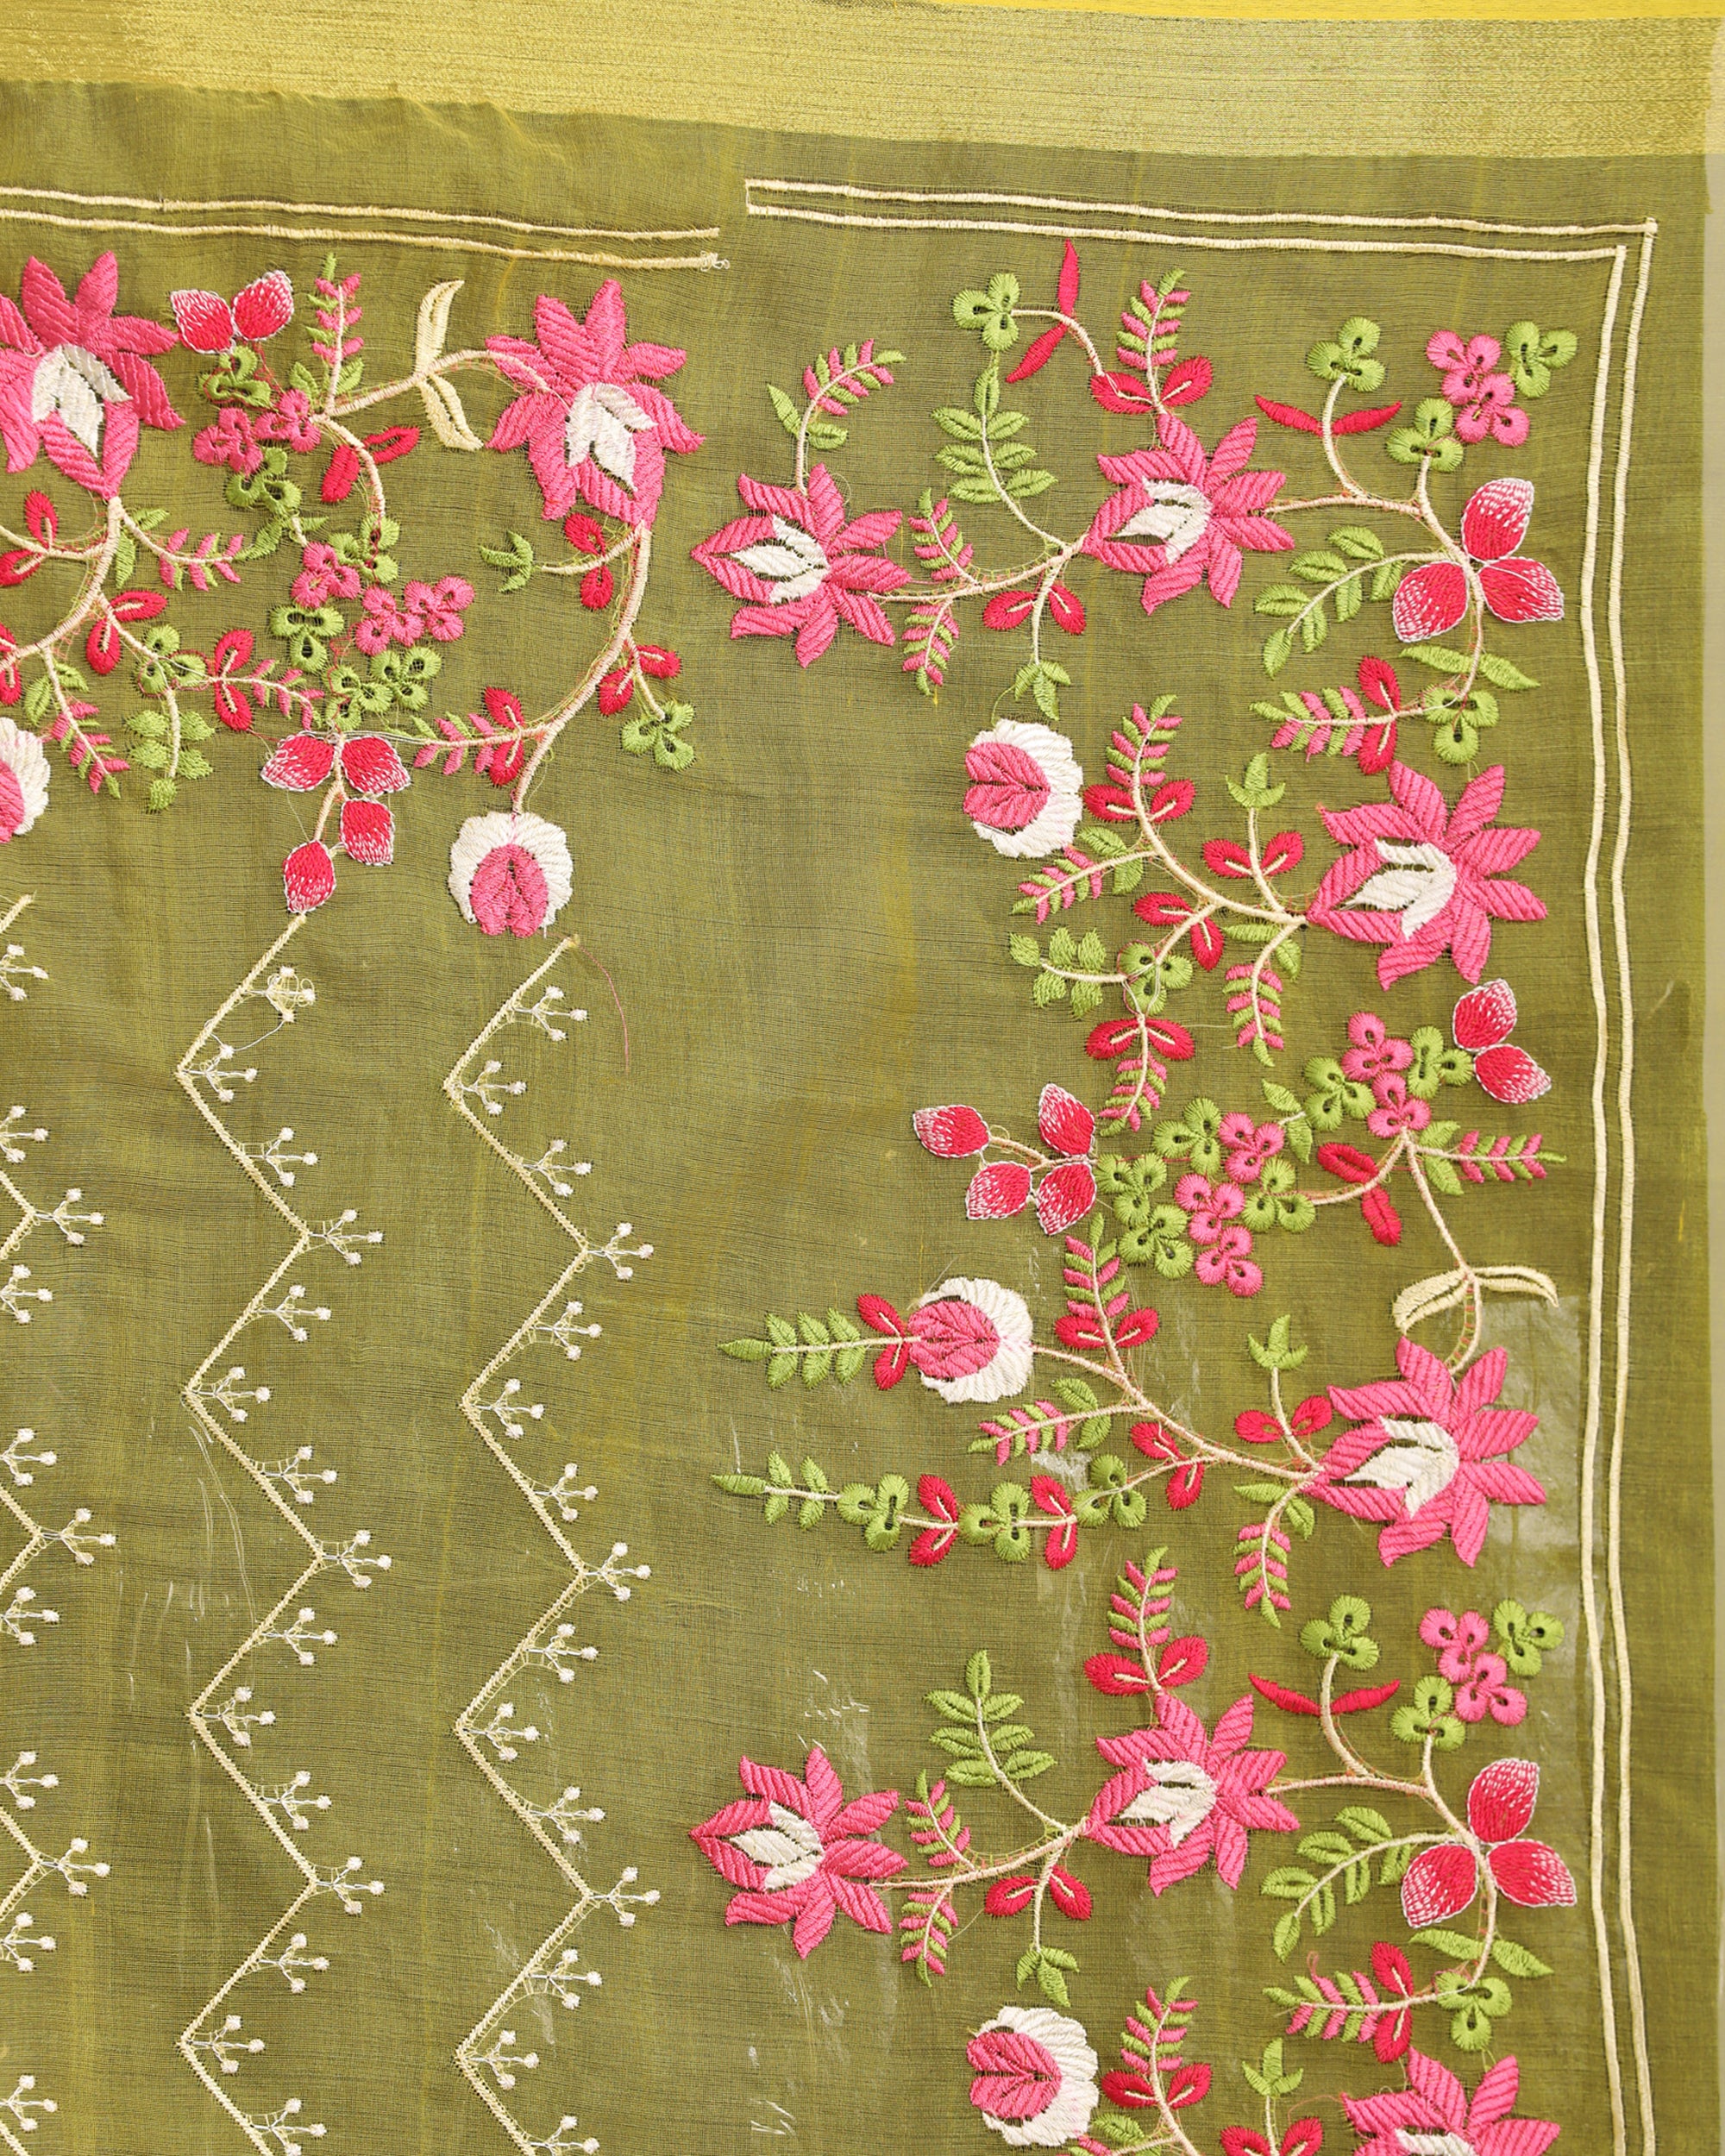 Women's Yellow Art Silk Muslin Handloom Embroidery Saree - Angoshobha